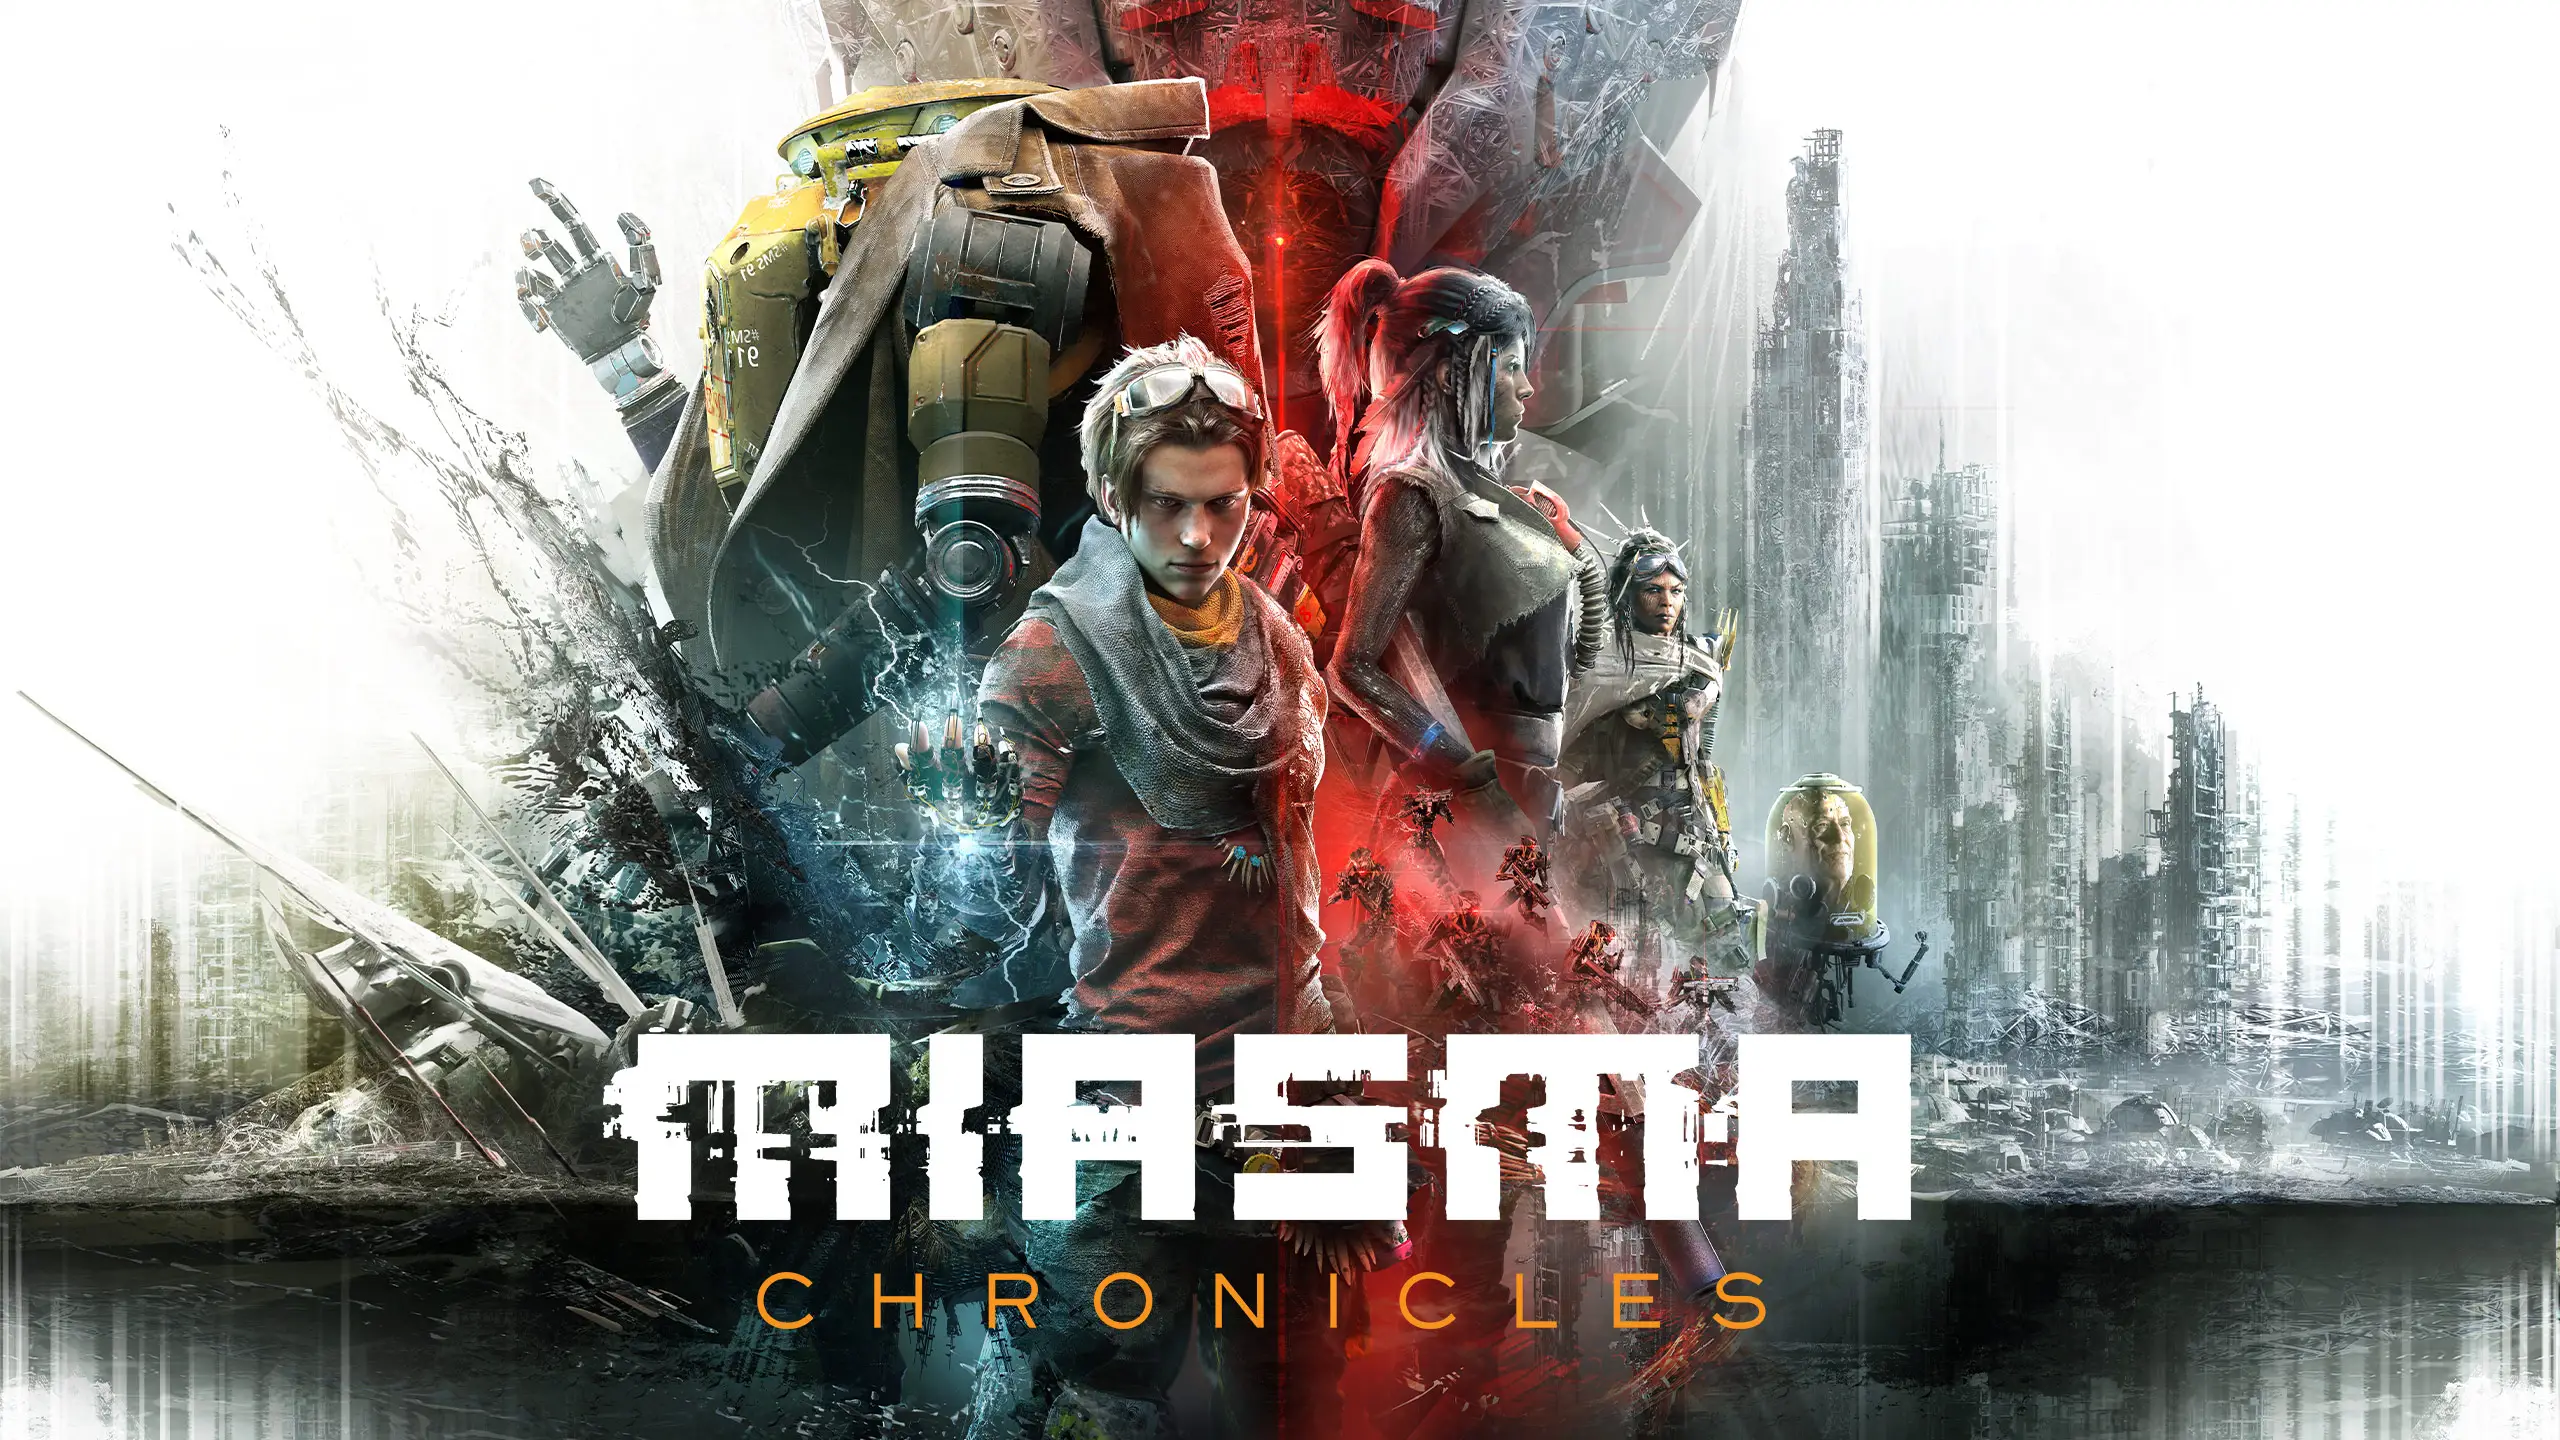 Гайд по кодам доступа в игре Miasma Chronicles